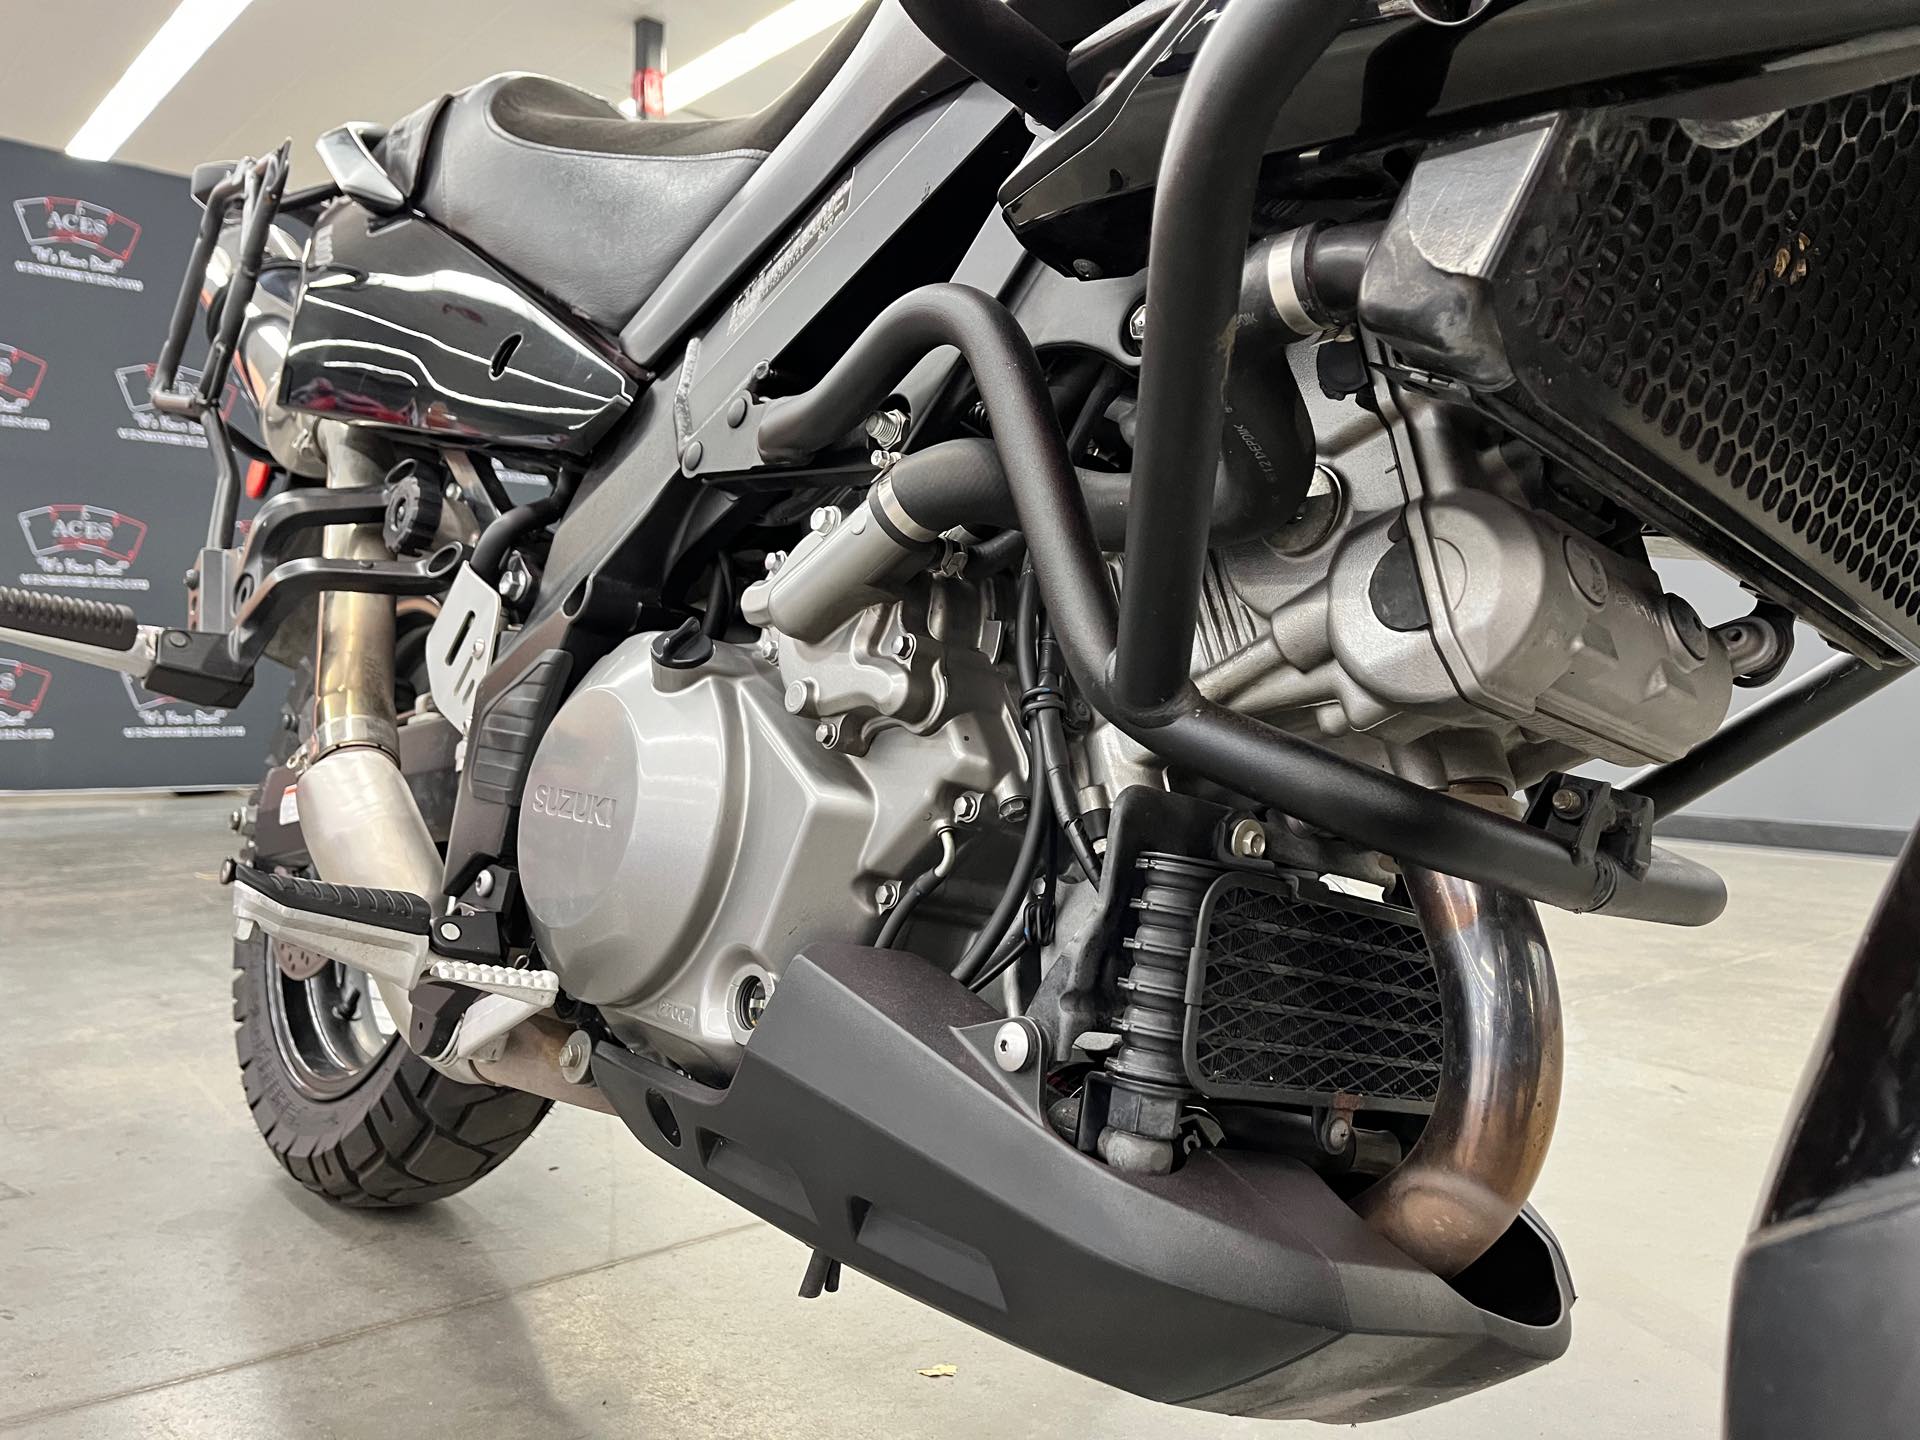 2012 Suzuki V-Strom 1000 Adventure at Aces Motorcycles - Denver